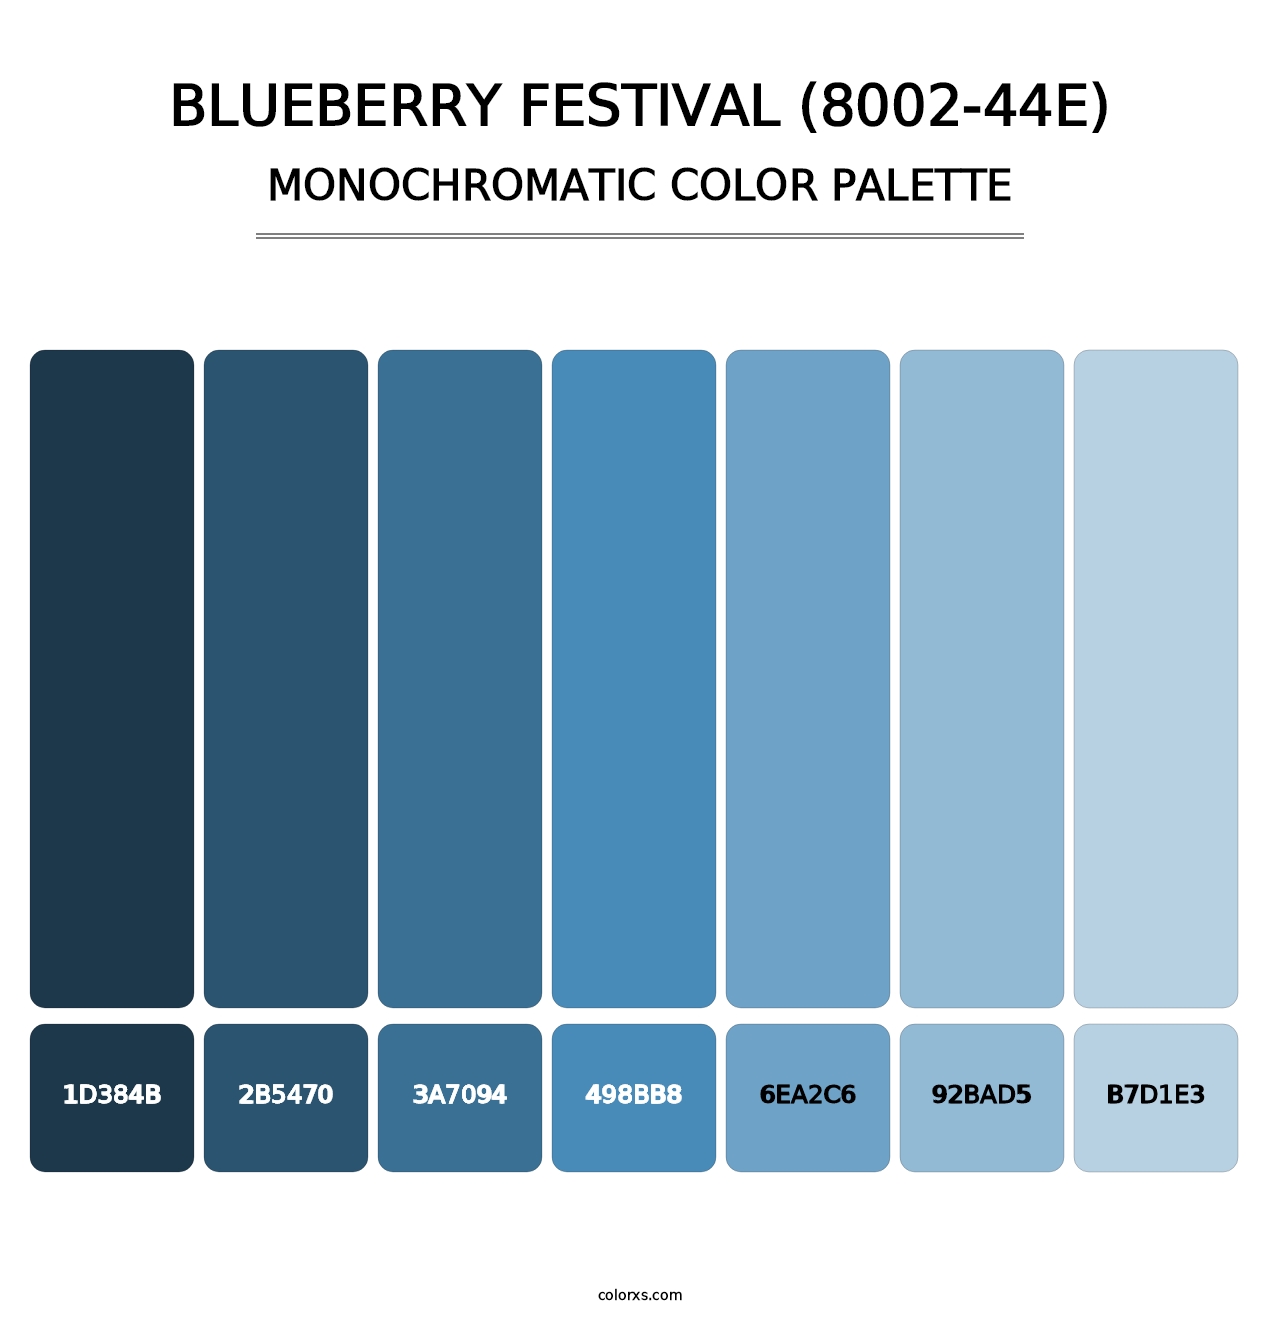 Blueberry Festival (8002-44E) - Monochromatic Color Palette